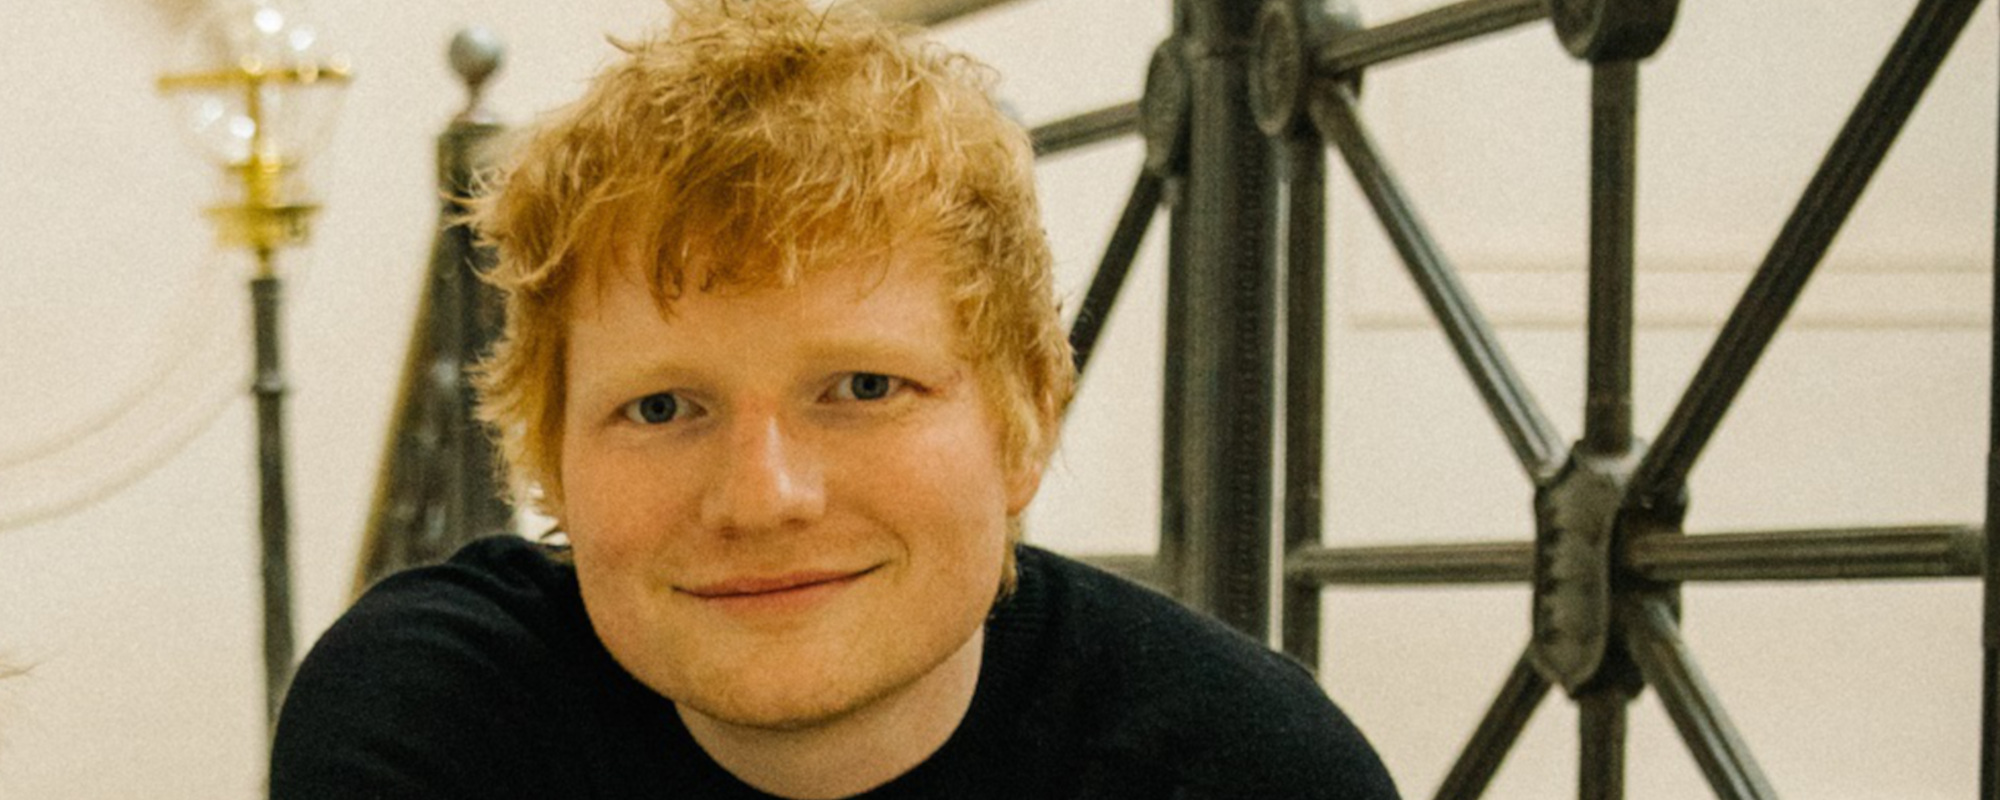 Ed Sheeran Wins Copyright Case Over “Shape of You”